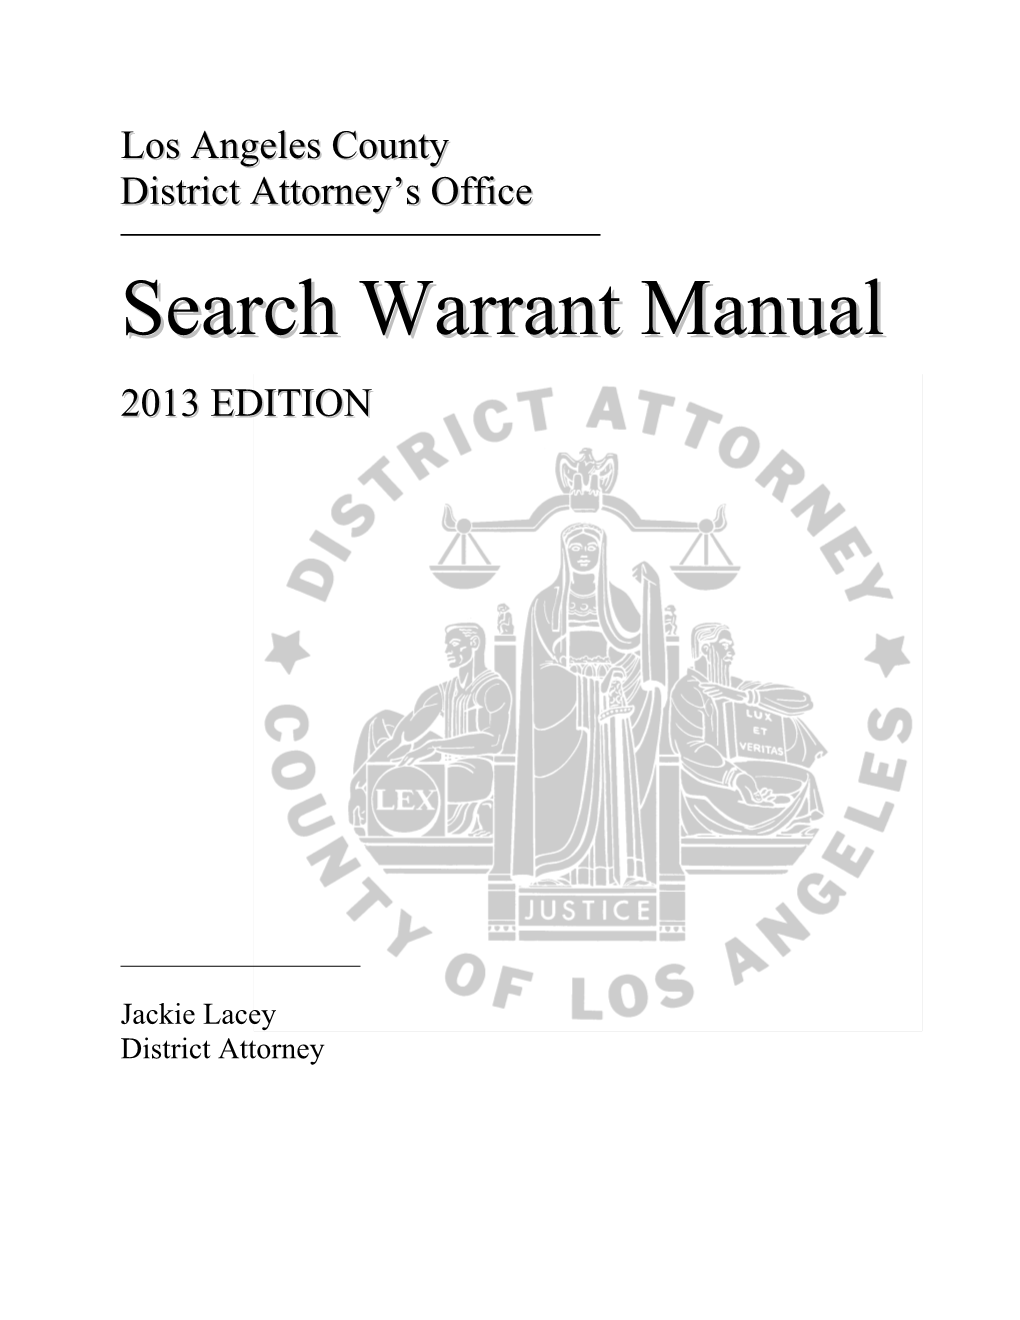 Search Warrant Manual